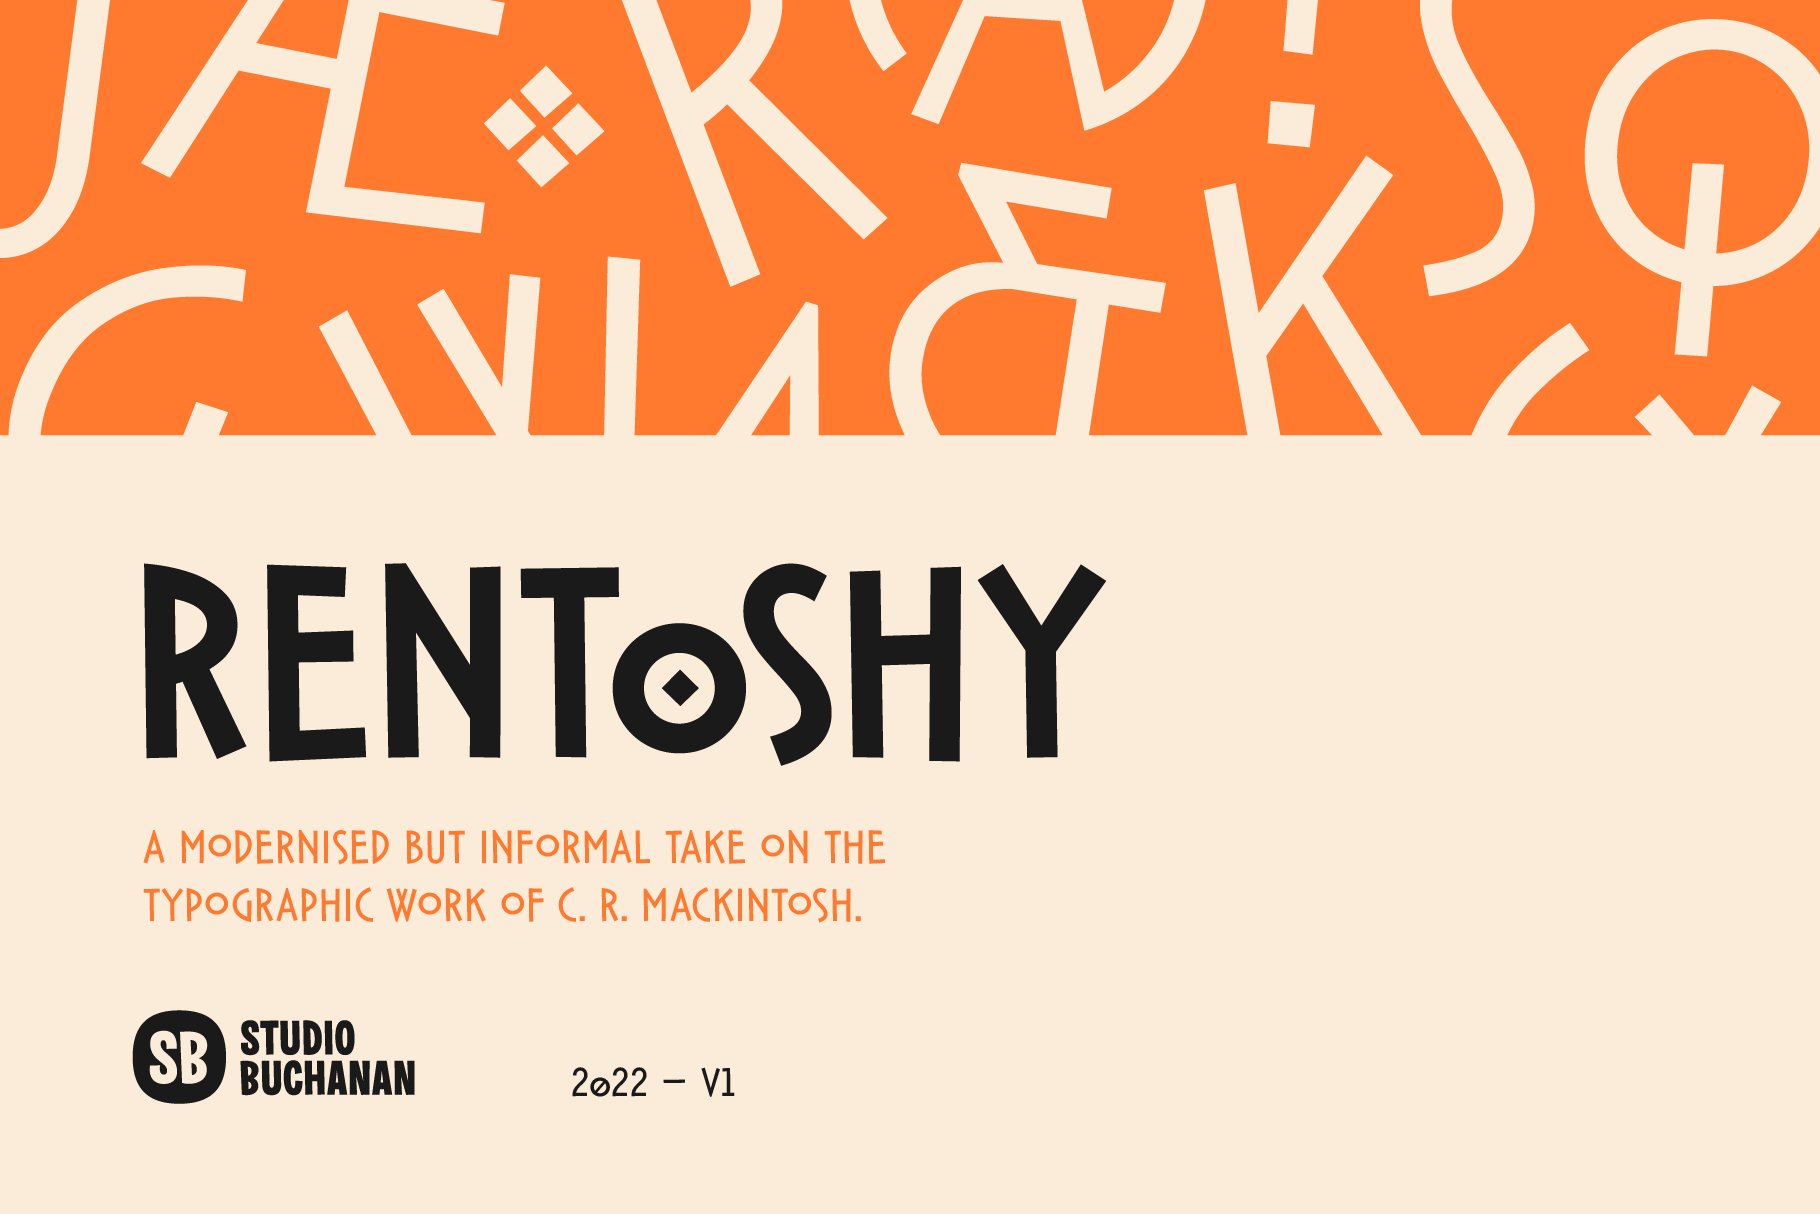 Rentoshy cover image.